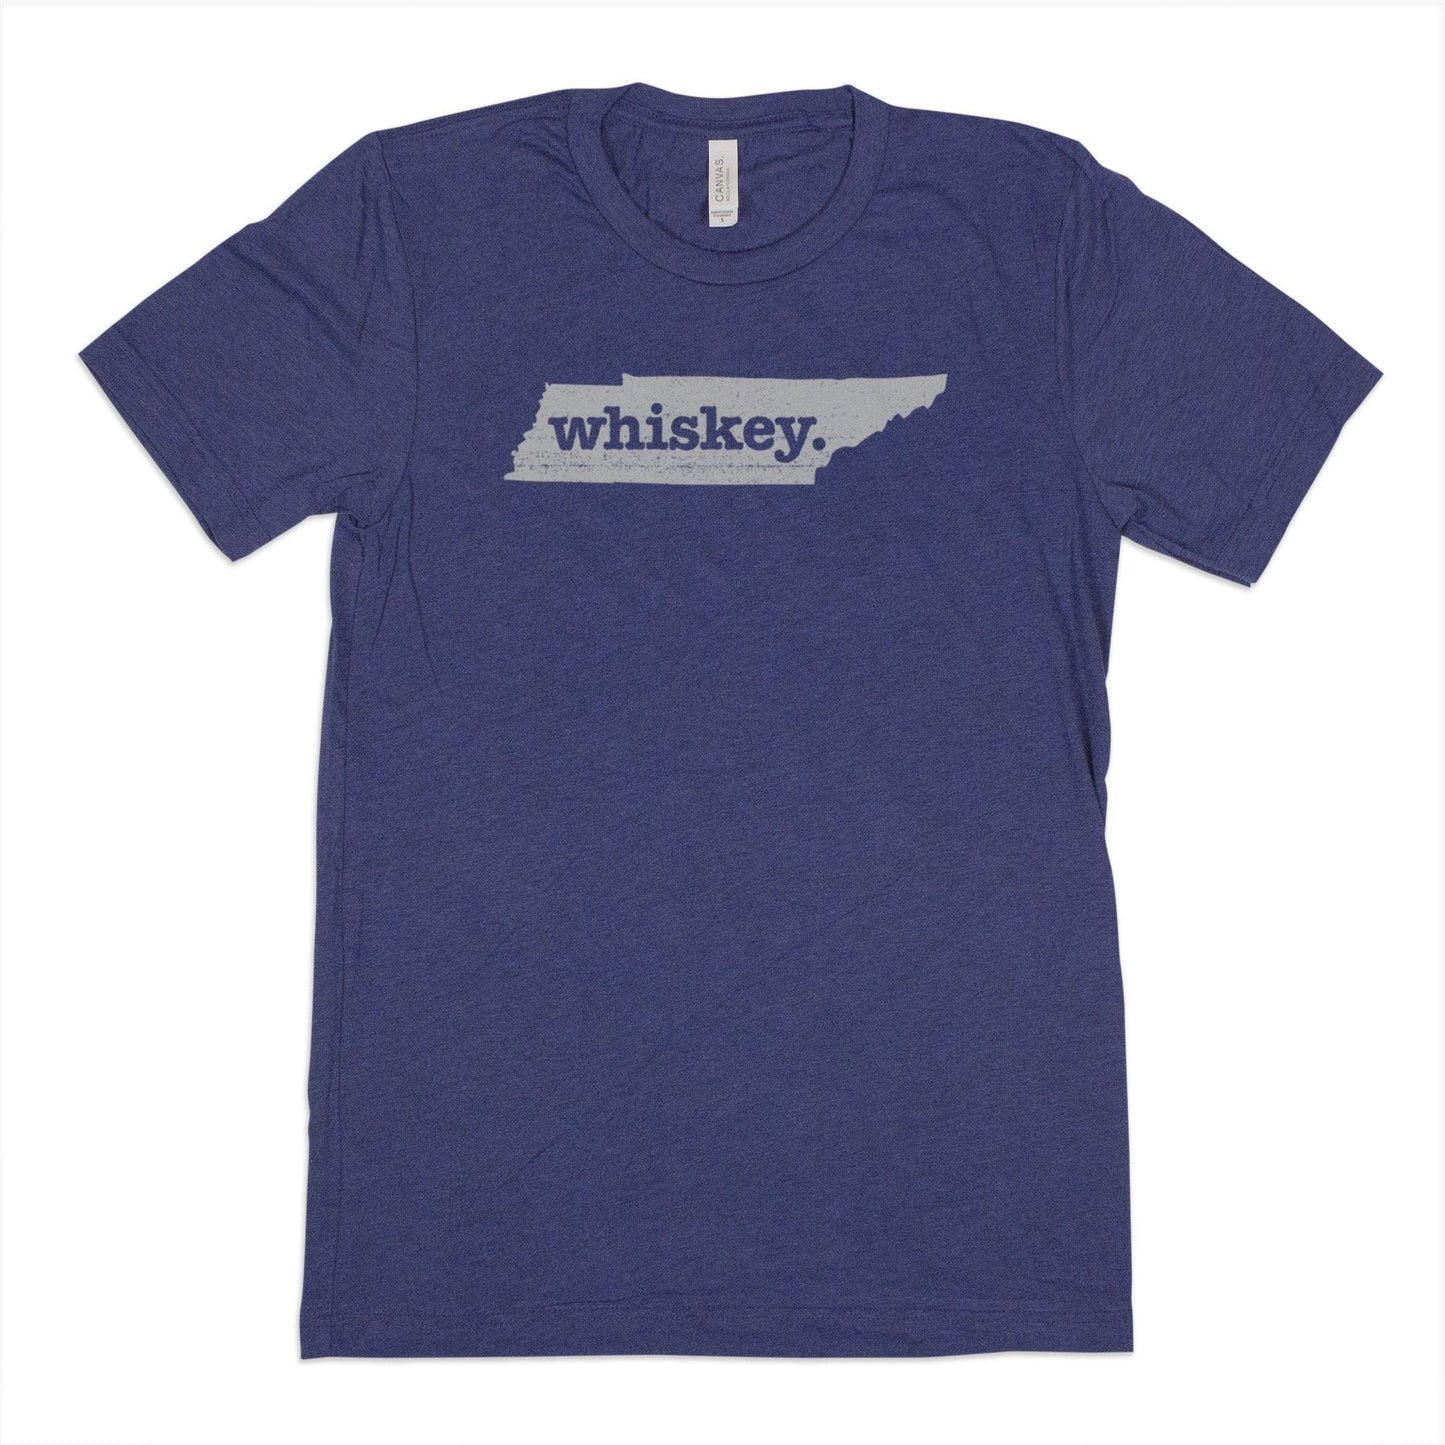 hike. Men's Unisex T-Shirt - North Dakota